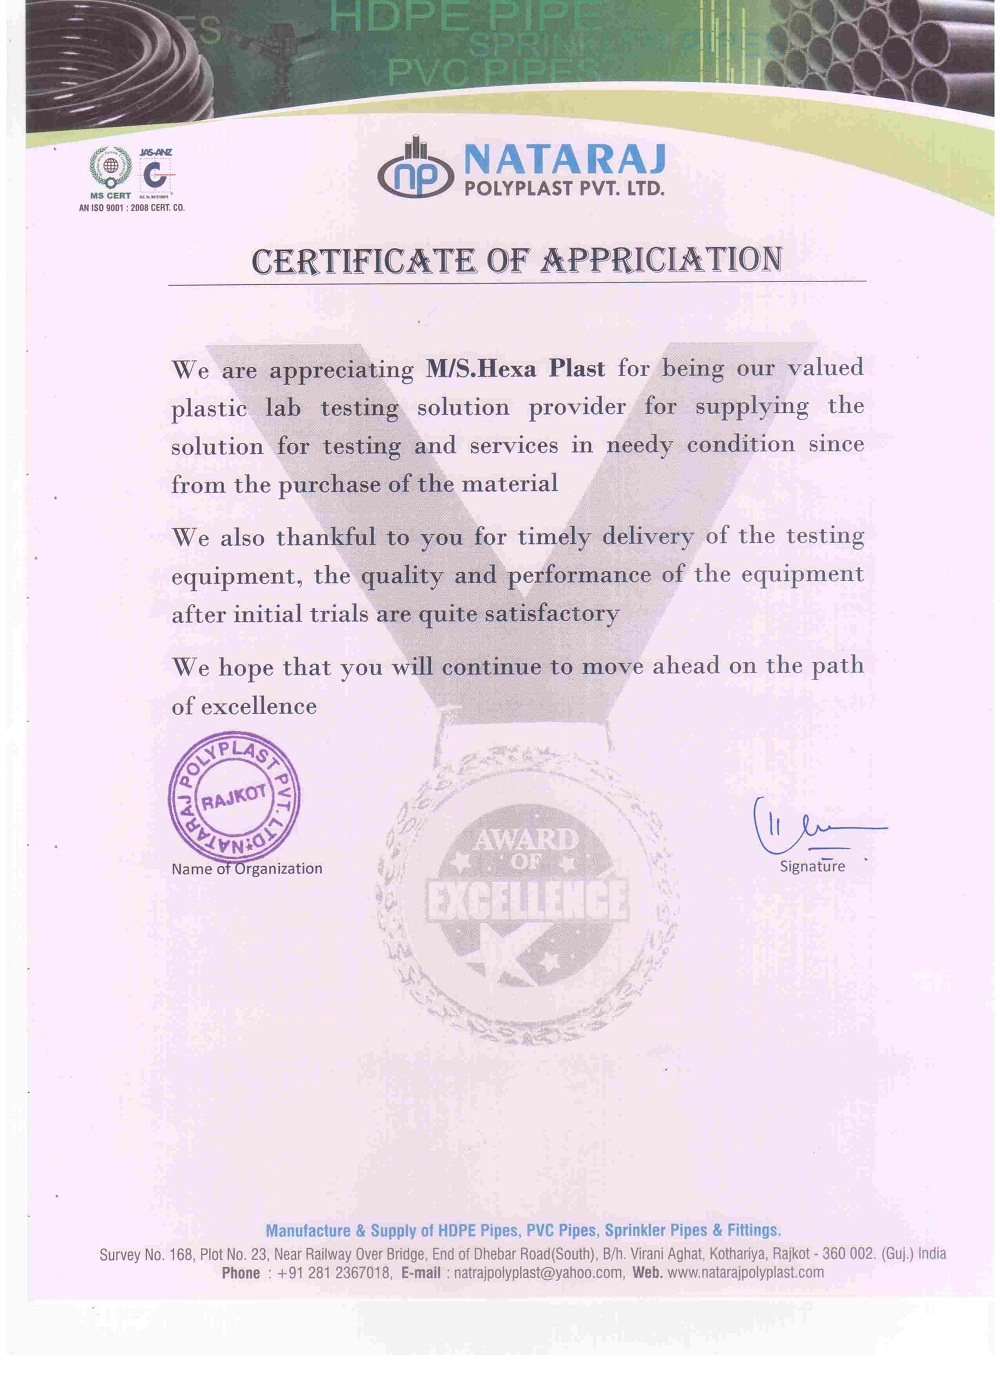 Image of Certificate of Appreciation by Natraj Polyplast PVT. Ltd.